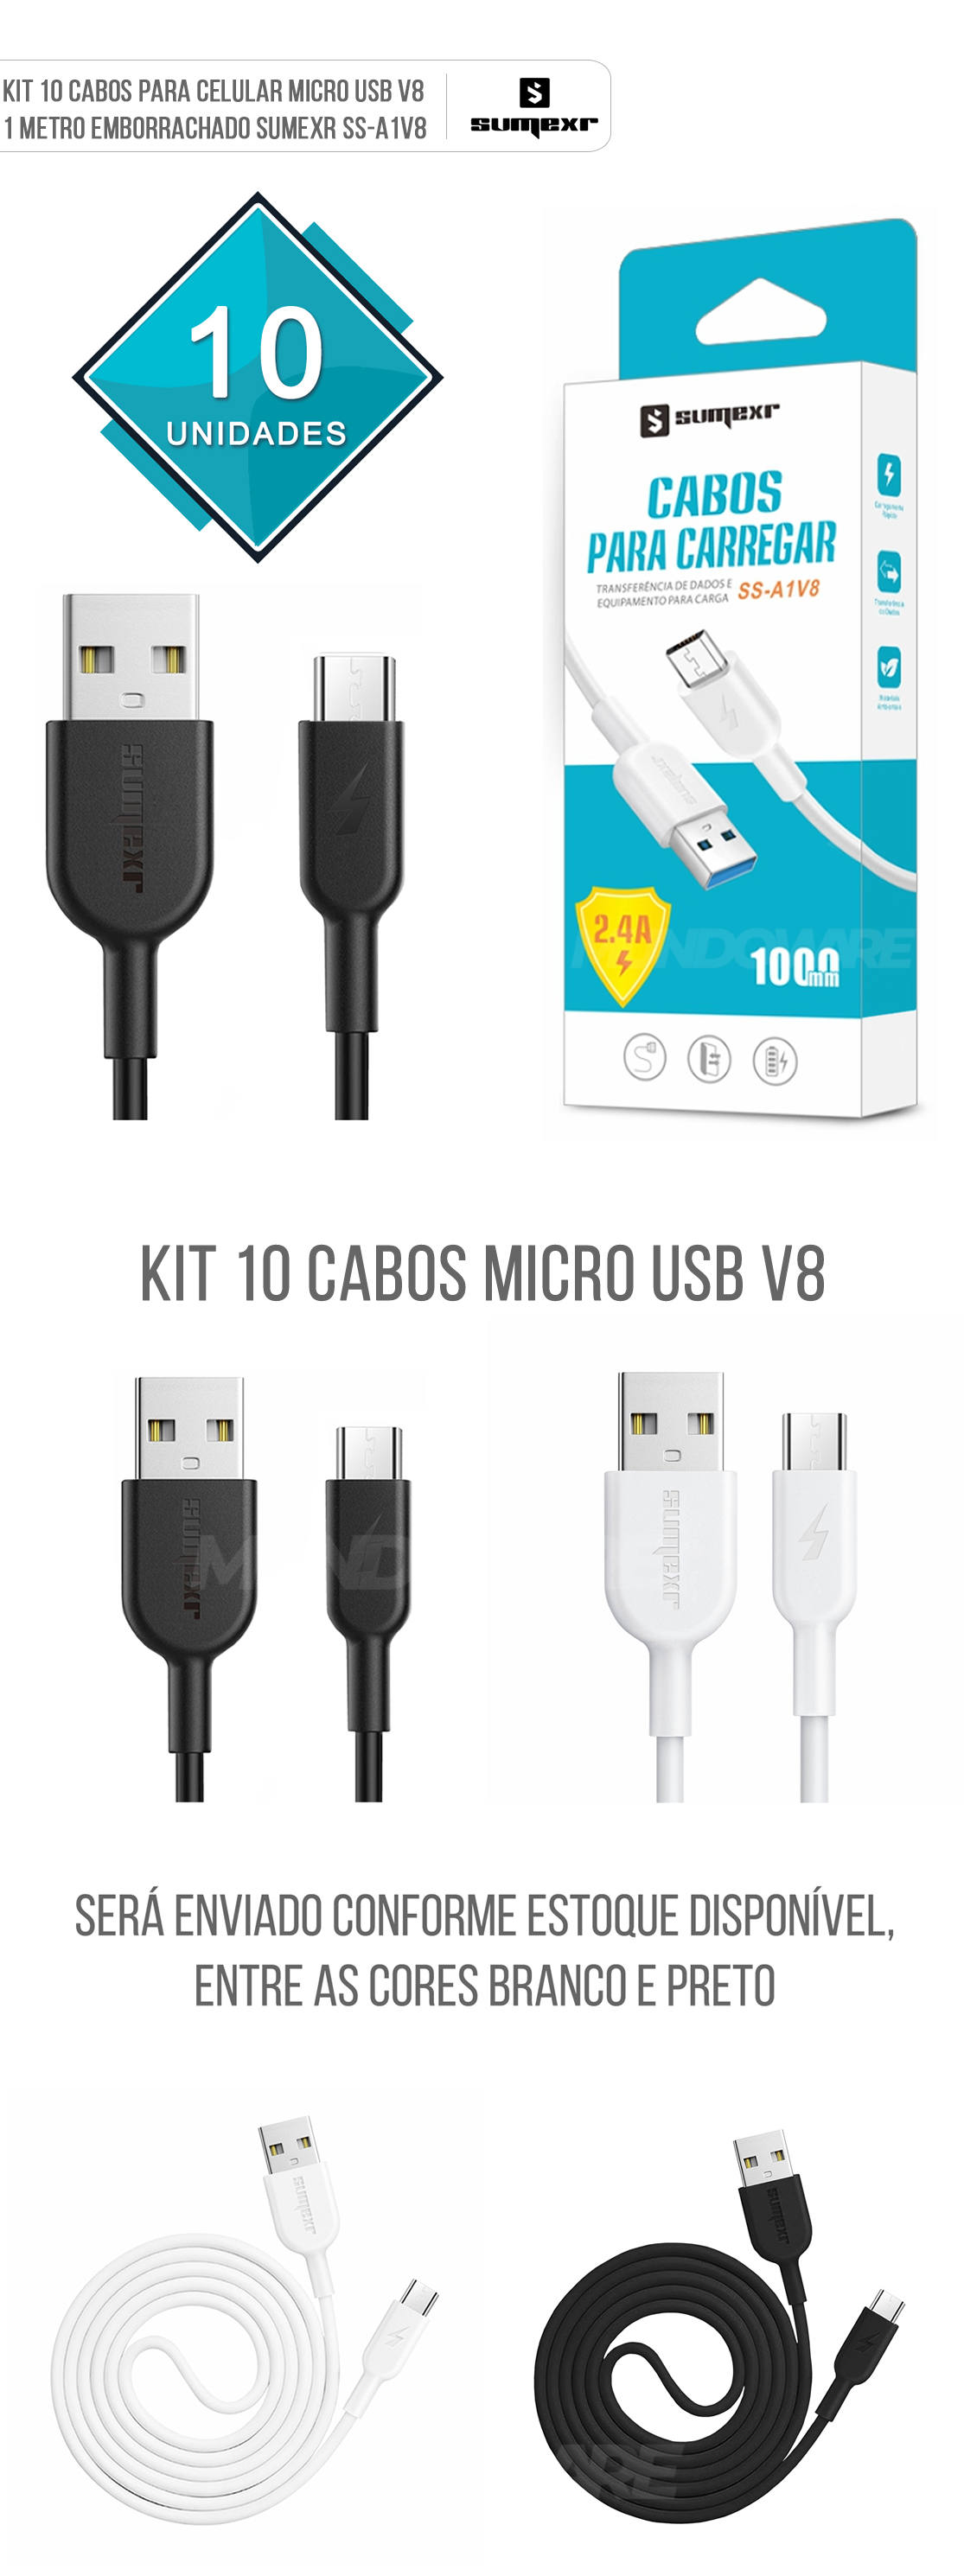 Kit 10x Cabo para Celular Micro USB V8 1 Metro Emborrachado e Resistente Sumexr SS-A1V8